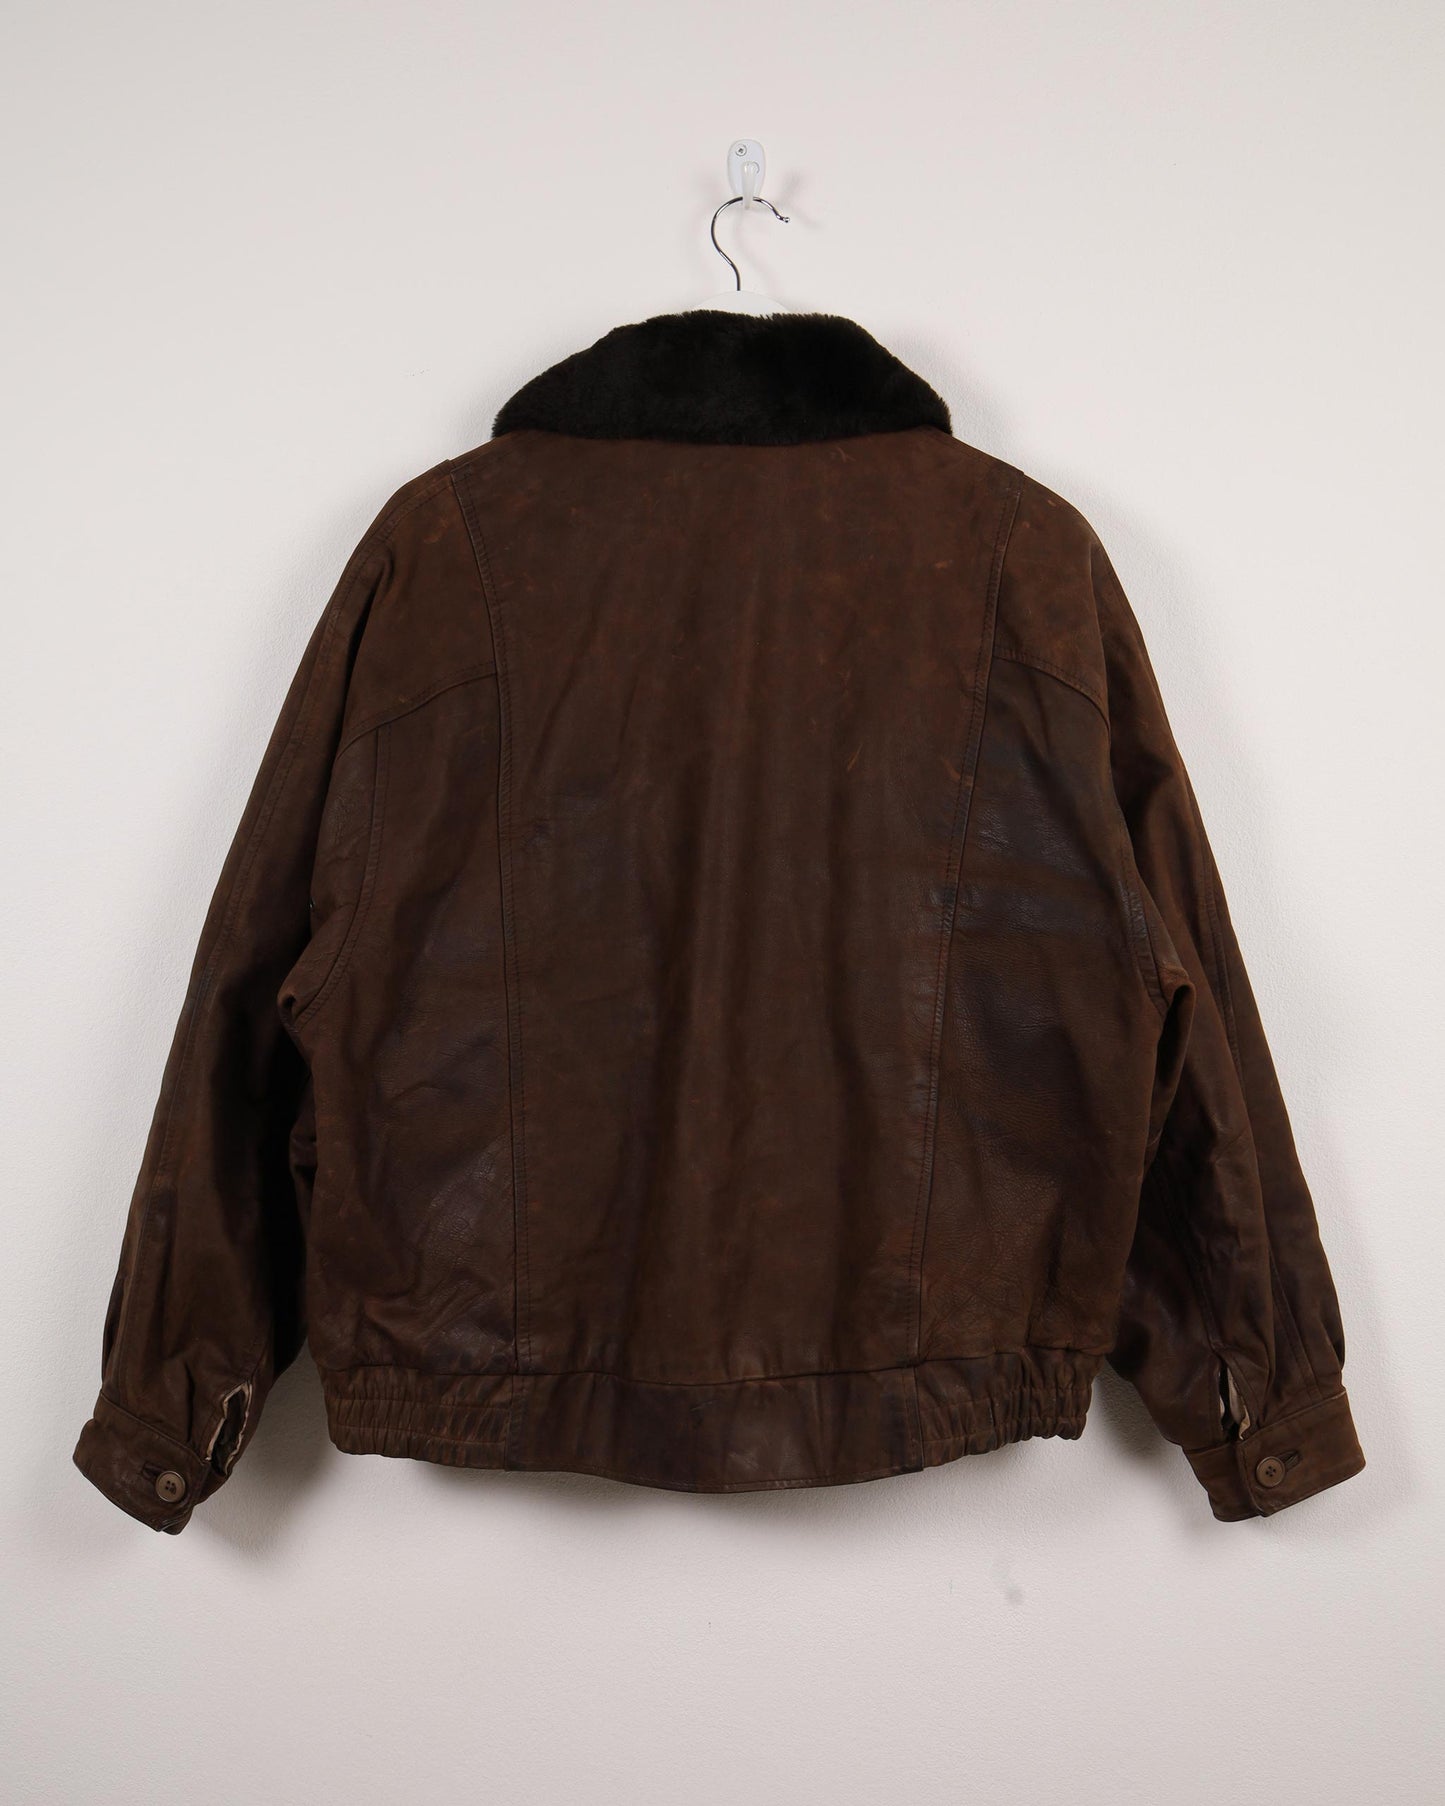 Vintage Fly Jacket Aviator Bomber Leather Jacket W/ Removable Neck Fur